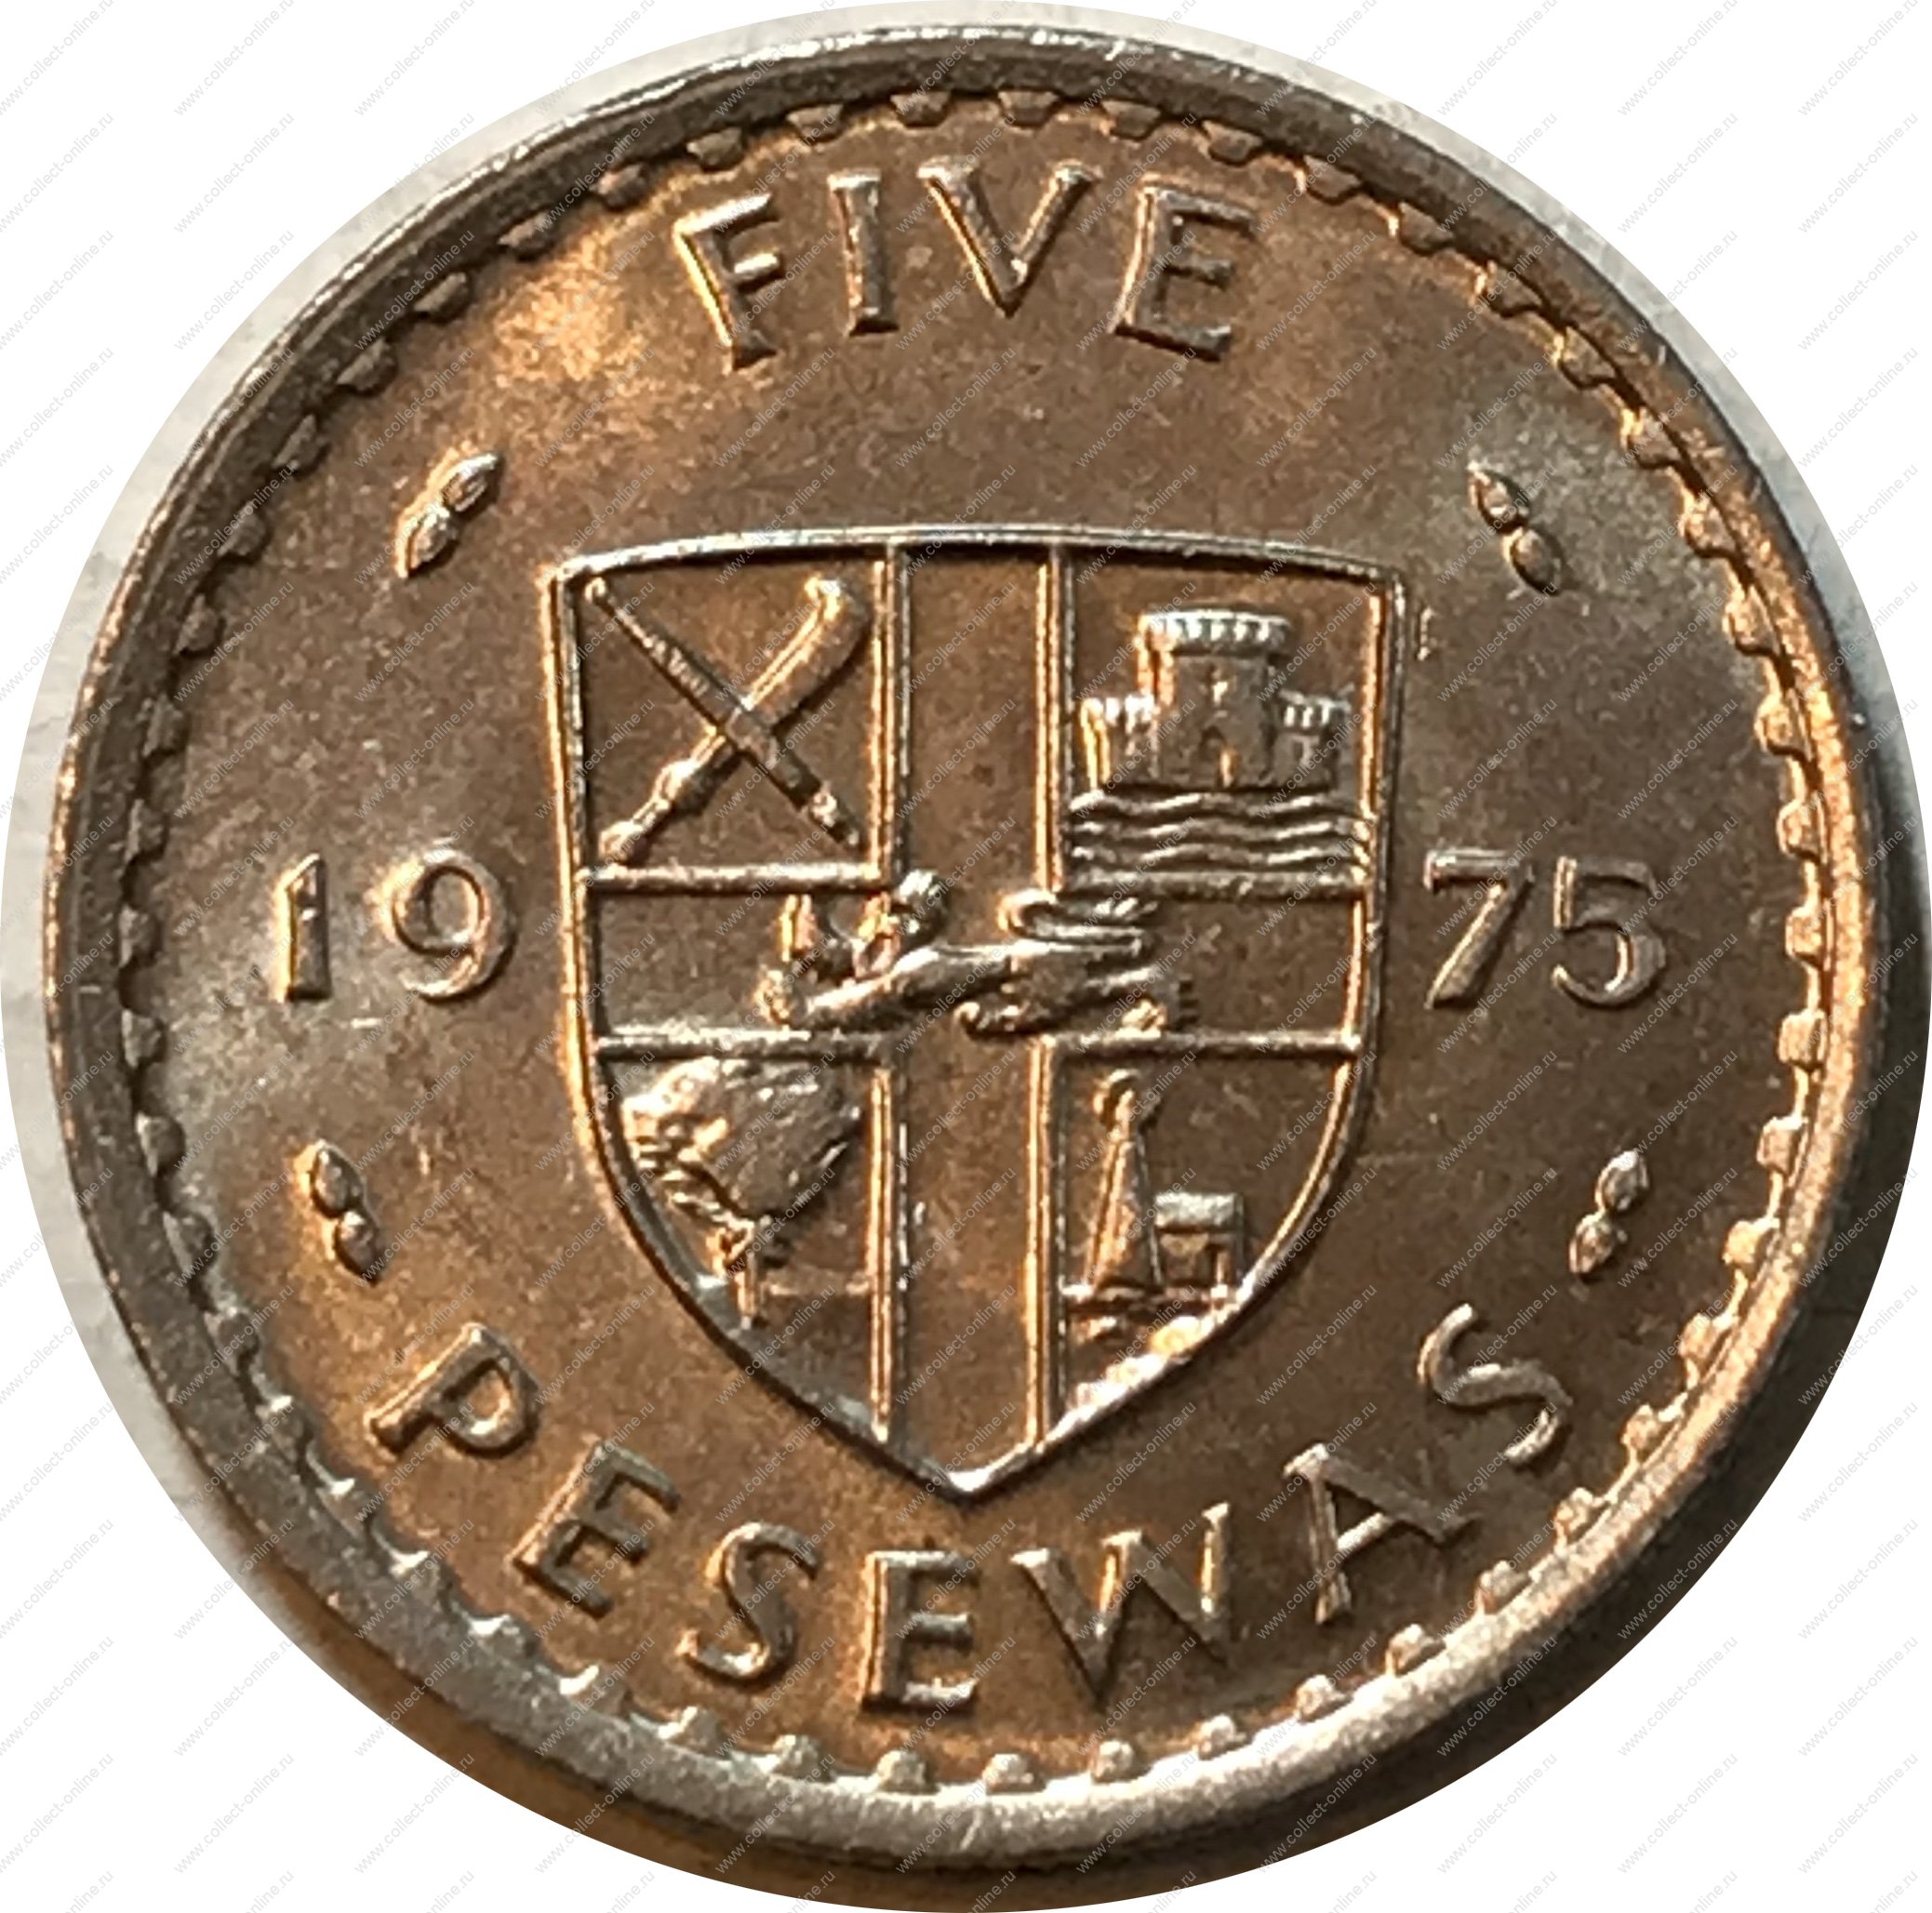 Купить монеты гана. 5 Песева 1964 гана. 5 Песева 1968 гана. Монеты Республики гана. Монета 1 седи 1984 гана.